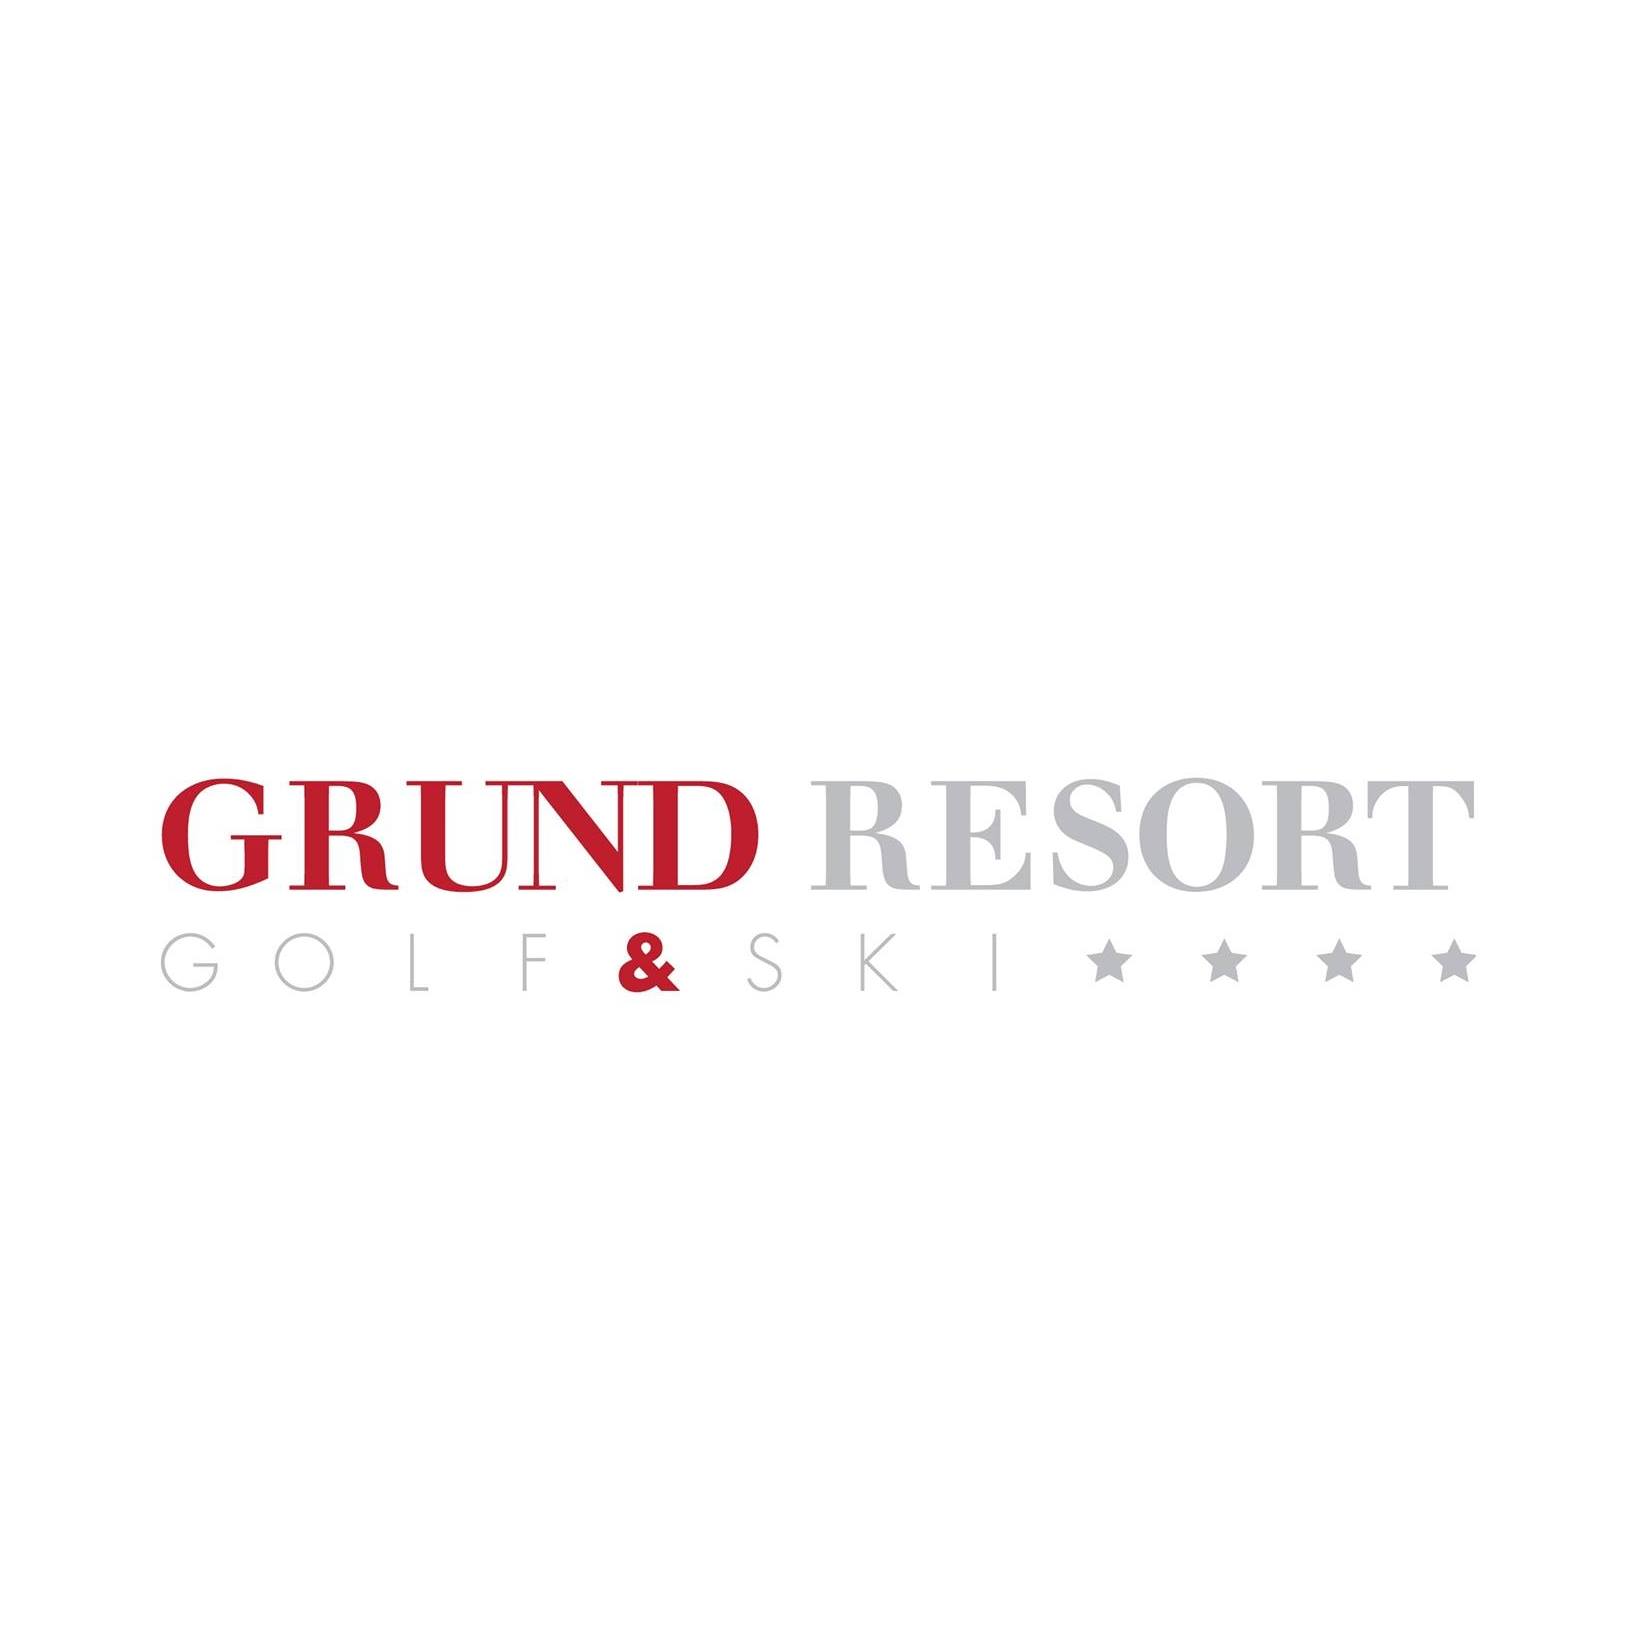 Image result for Grund Resort Golf & Ski